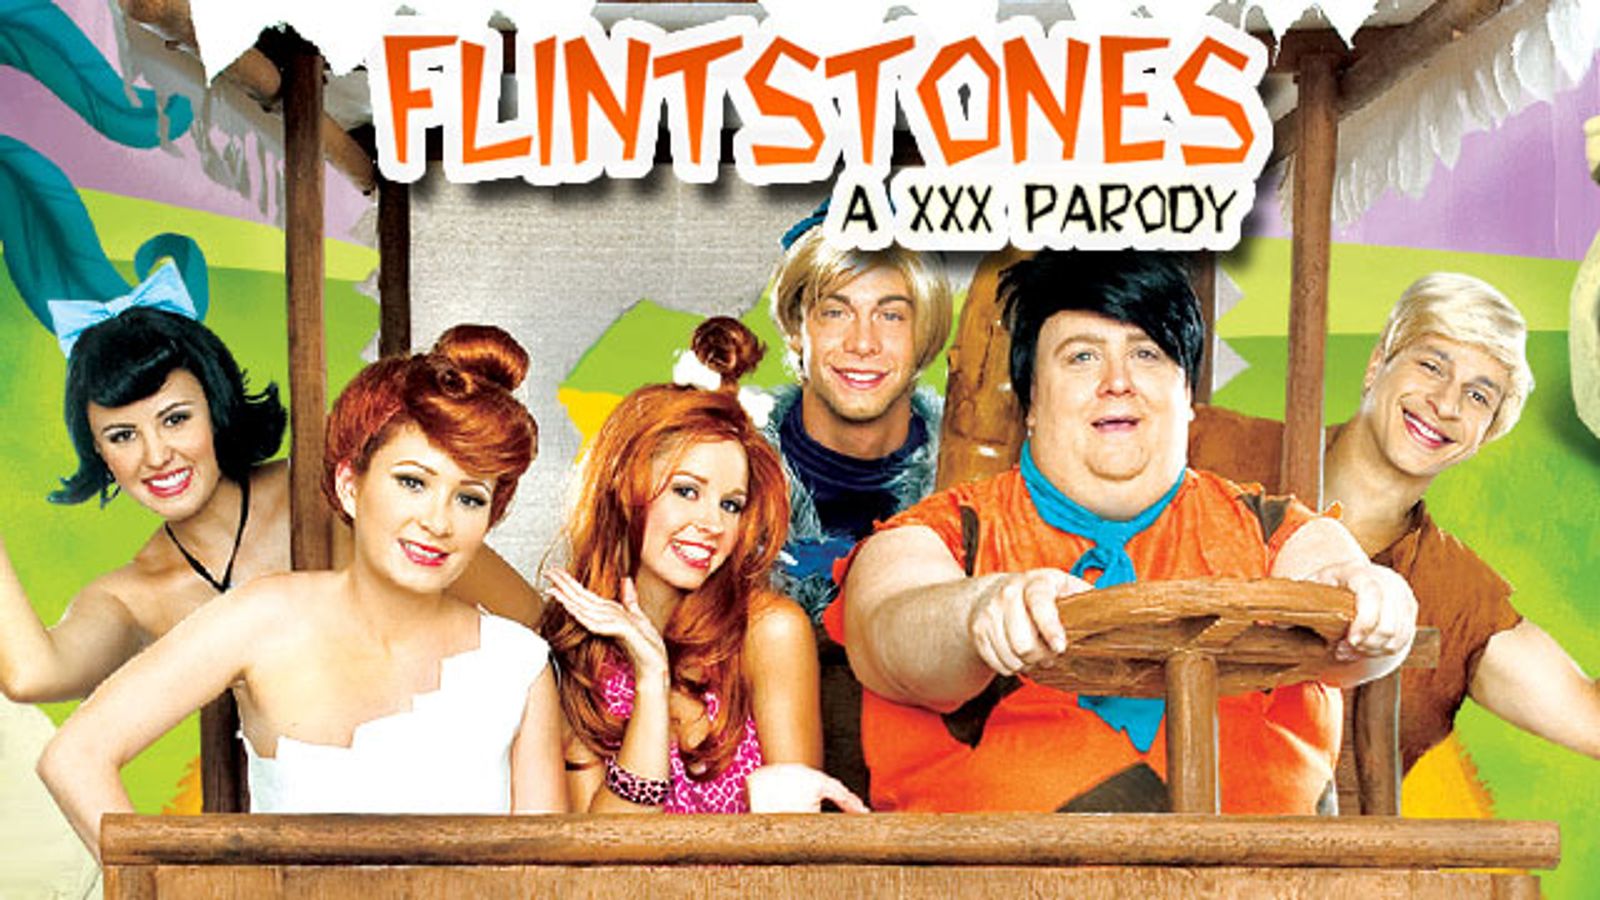 Flinstones xxx parody